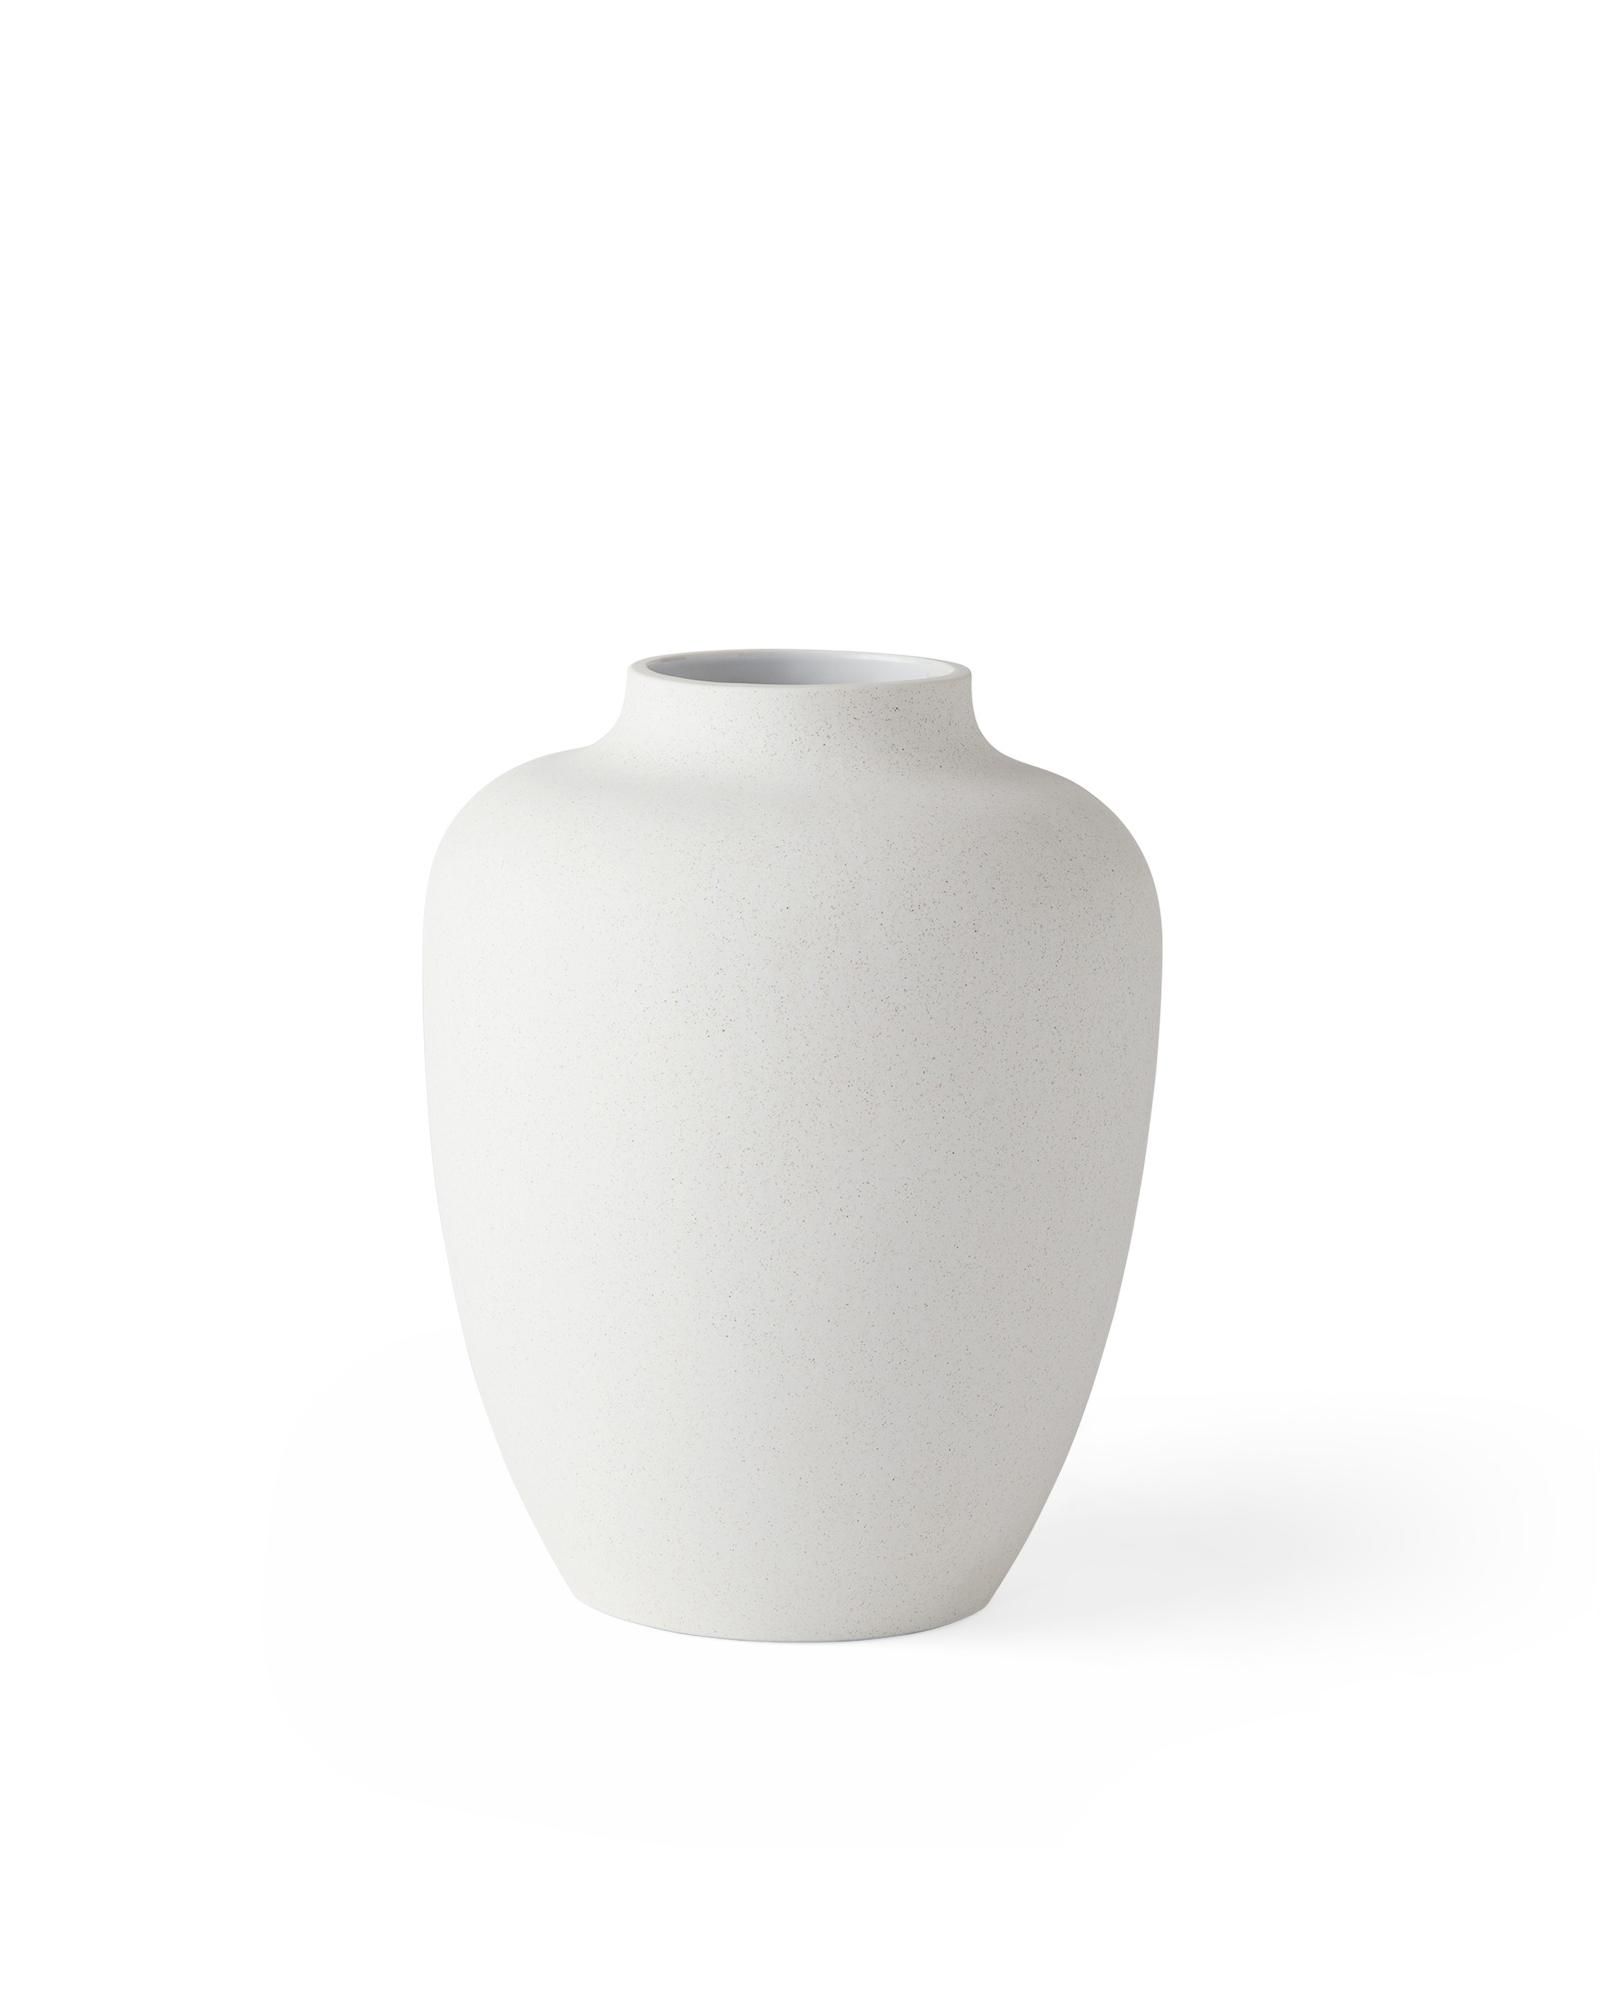 Morro Porcelain Vase | Serena and Lily